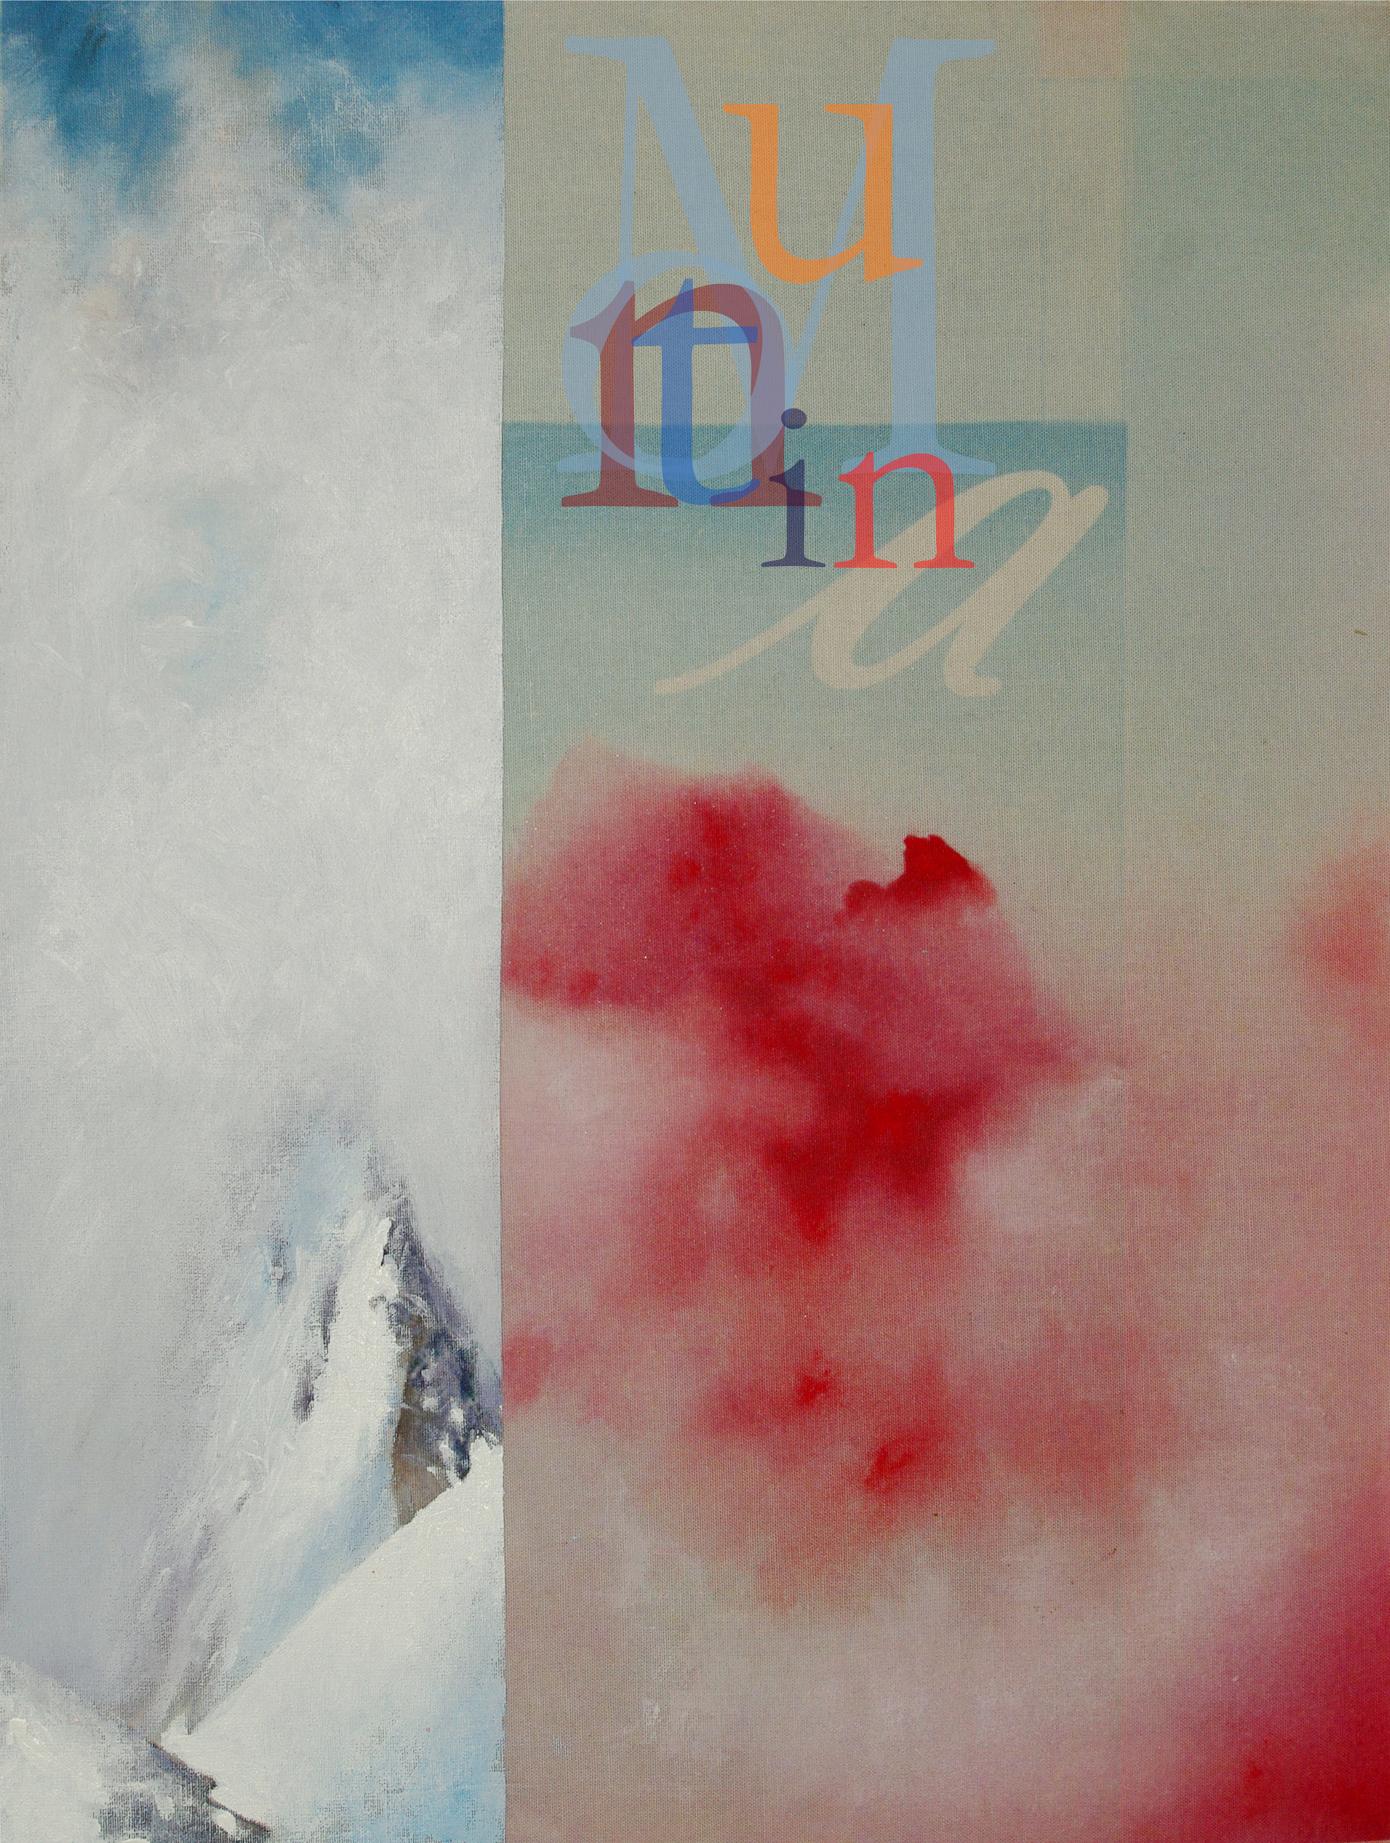 Moun 008 - Contemporary, Abstract, Expressionist, Modern, Street art, Surrealist